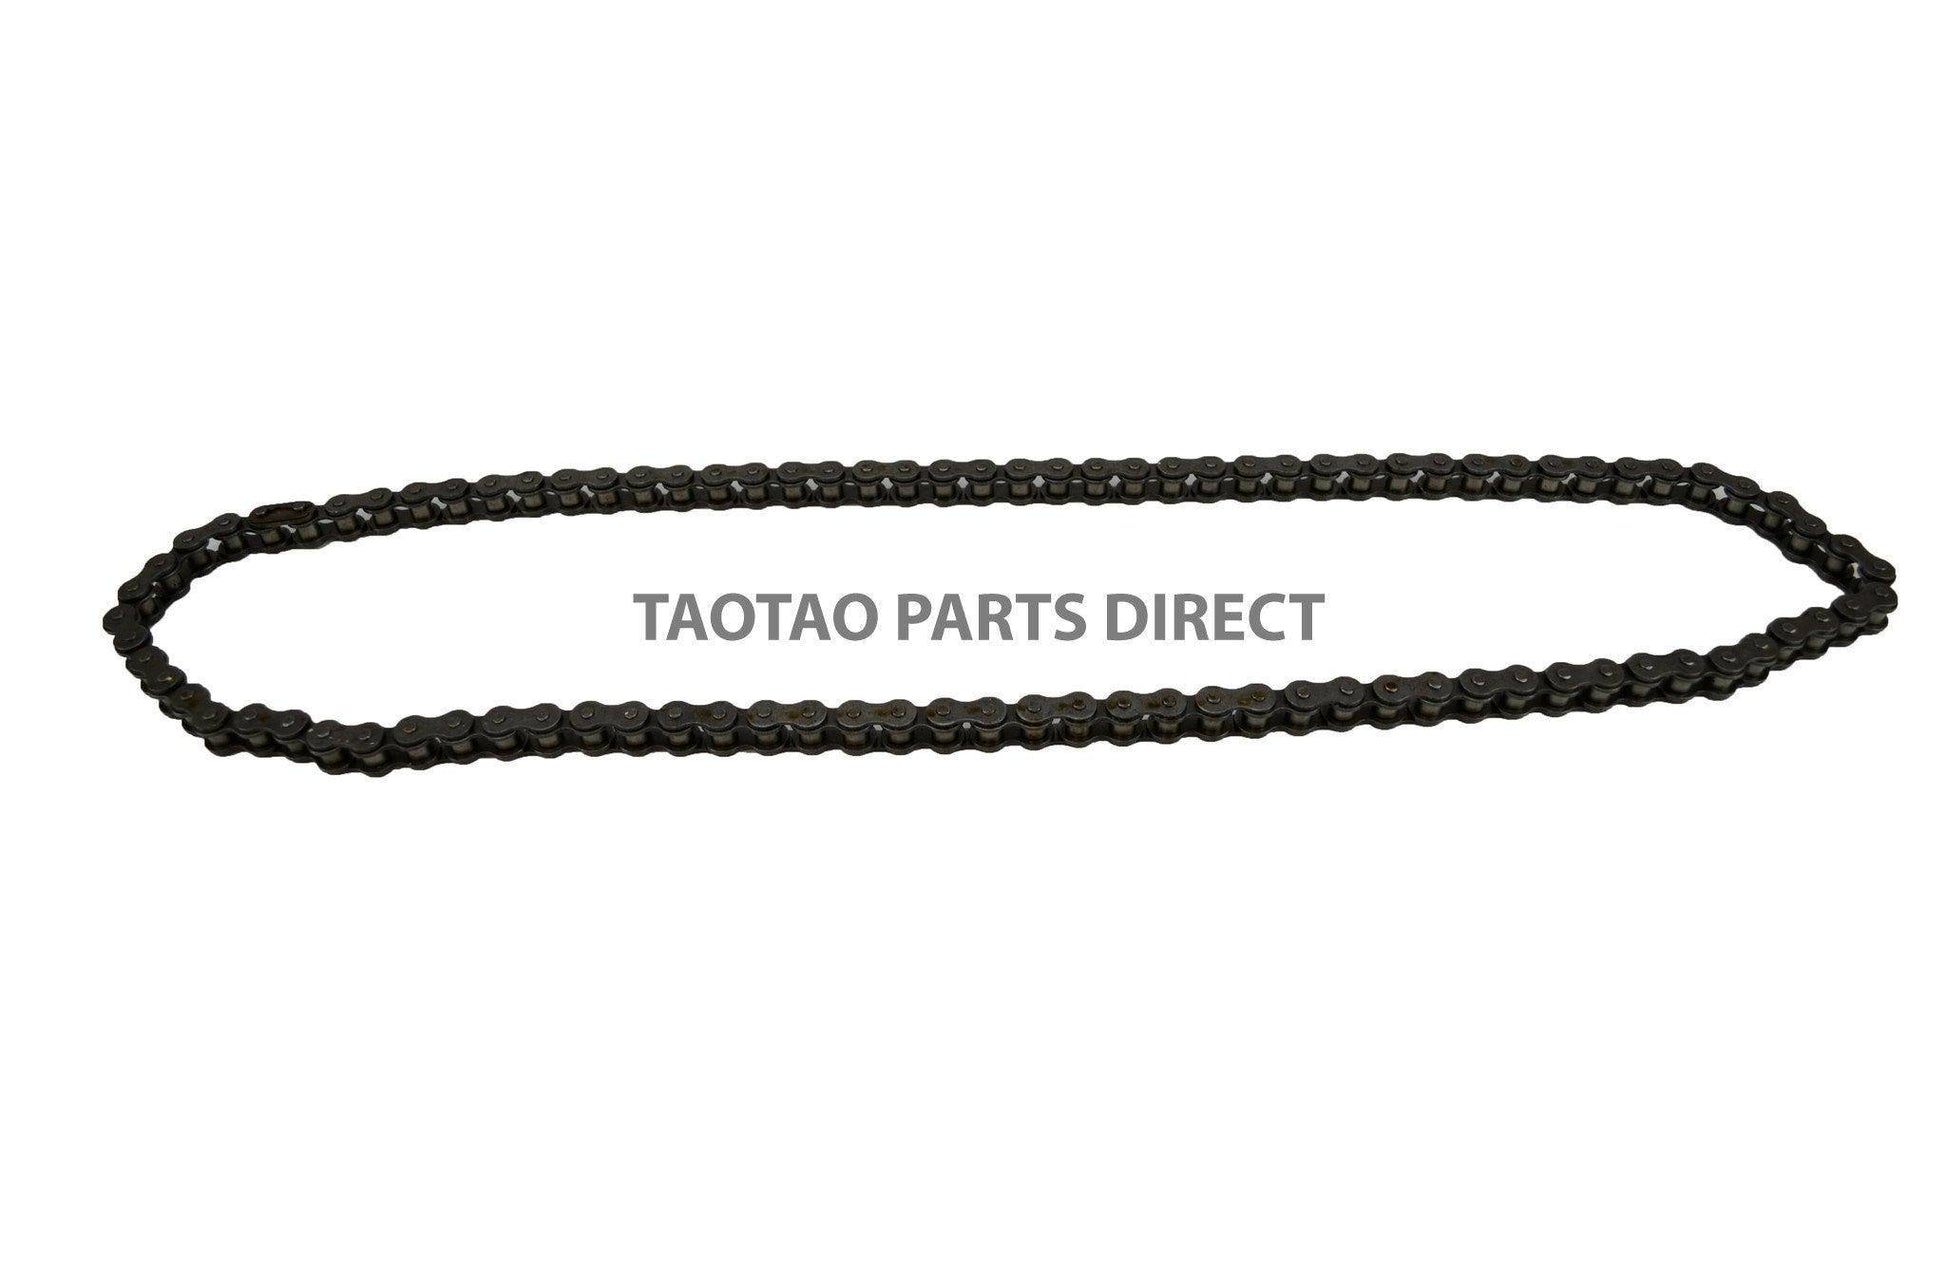 ATA125G Chain - TaoTao Parts Direct